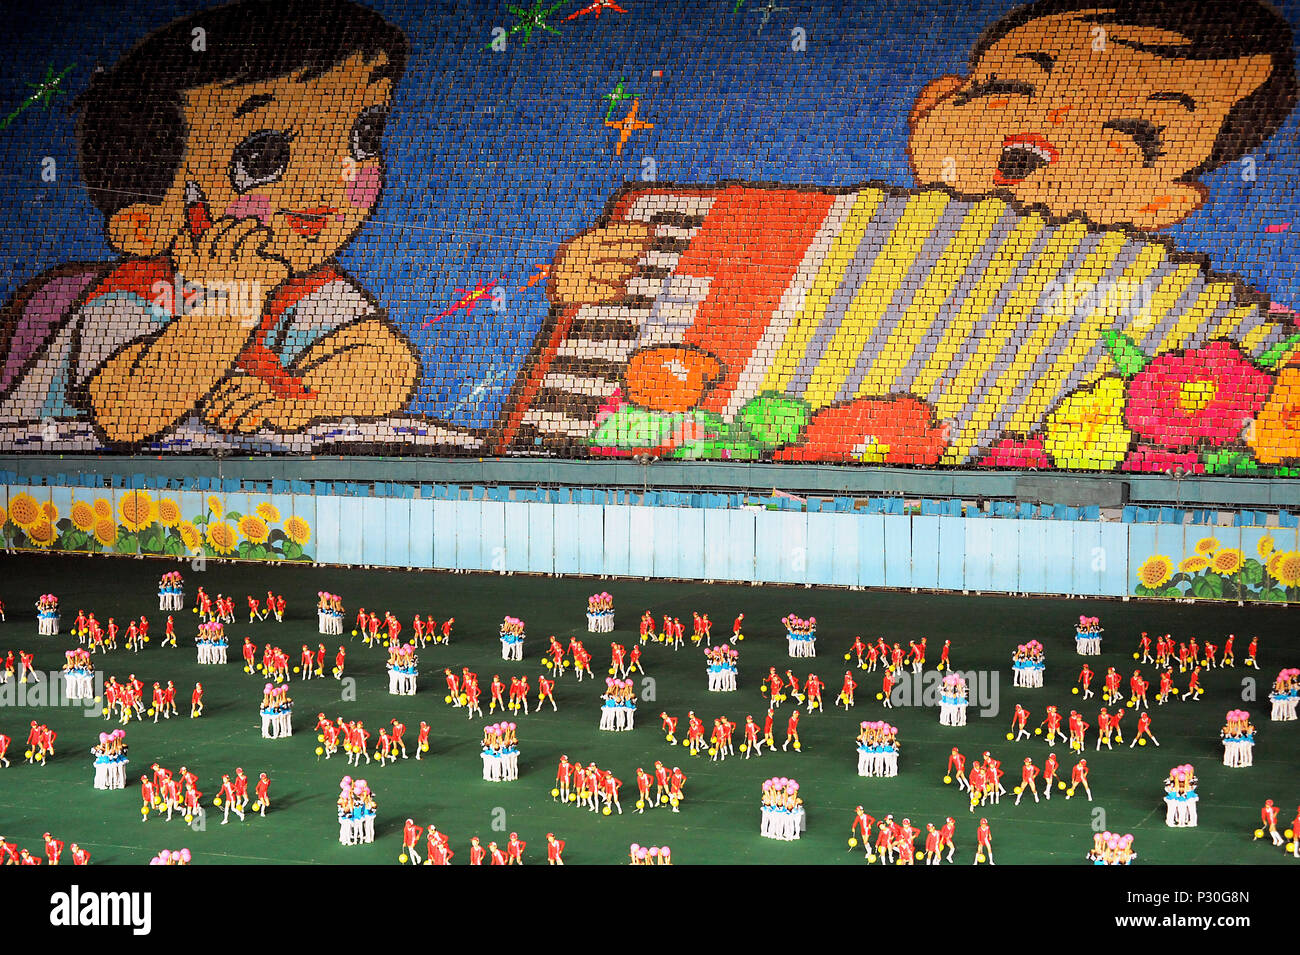 Pyongyang, North Korea, dancers and acrobats at the Arirang Festival Stock Photo